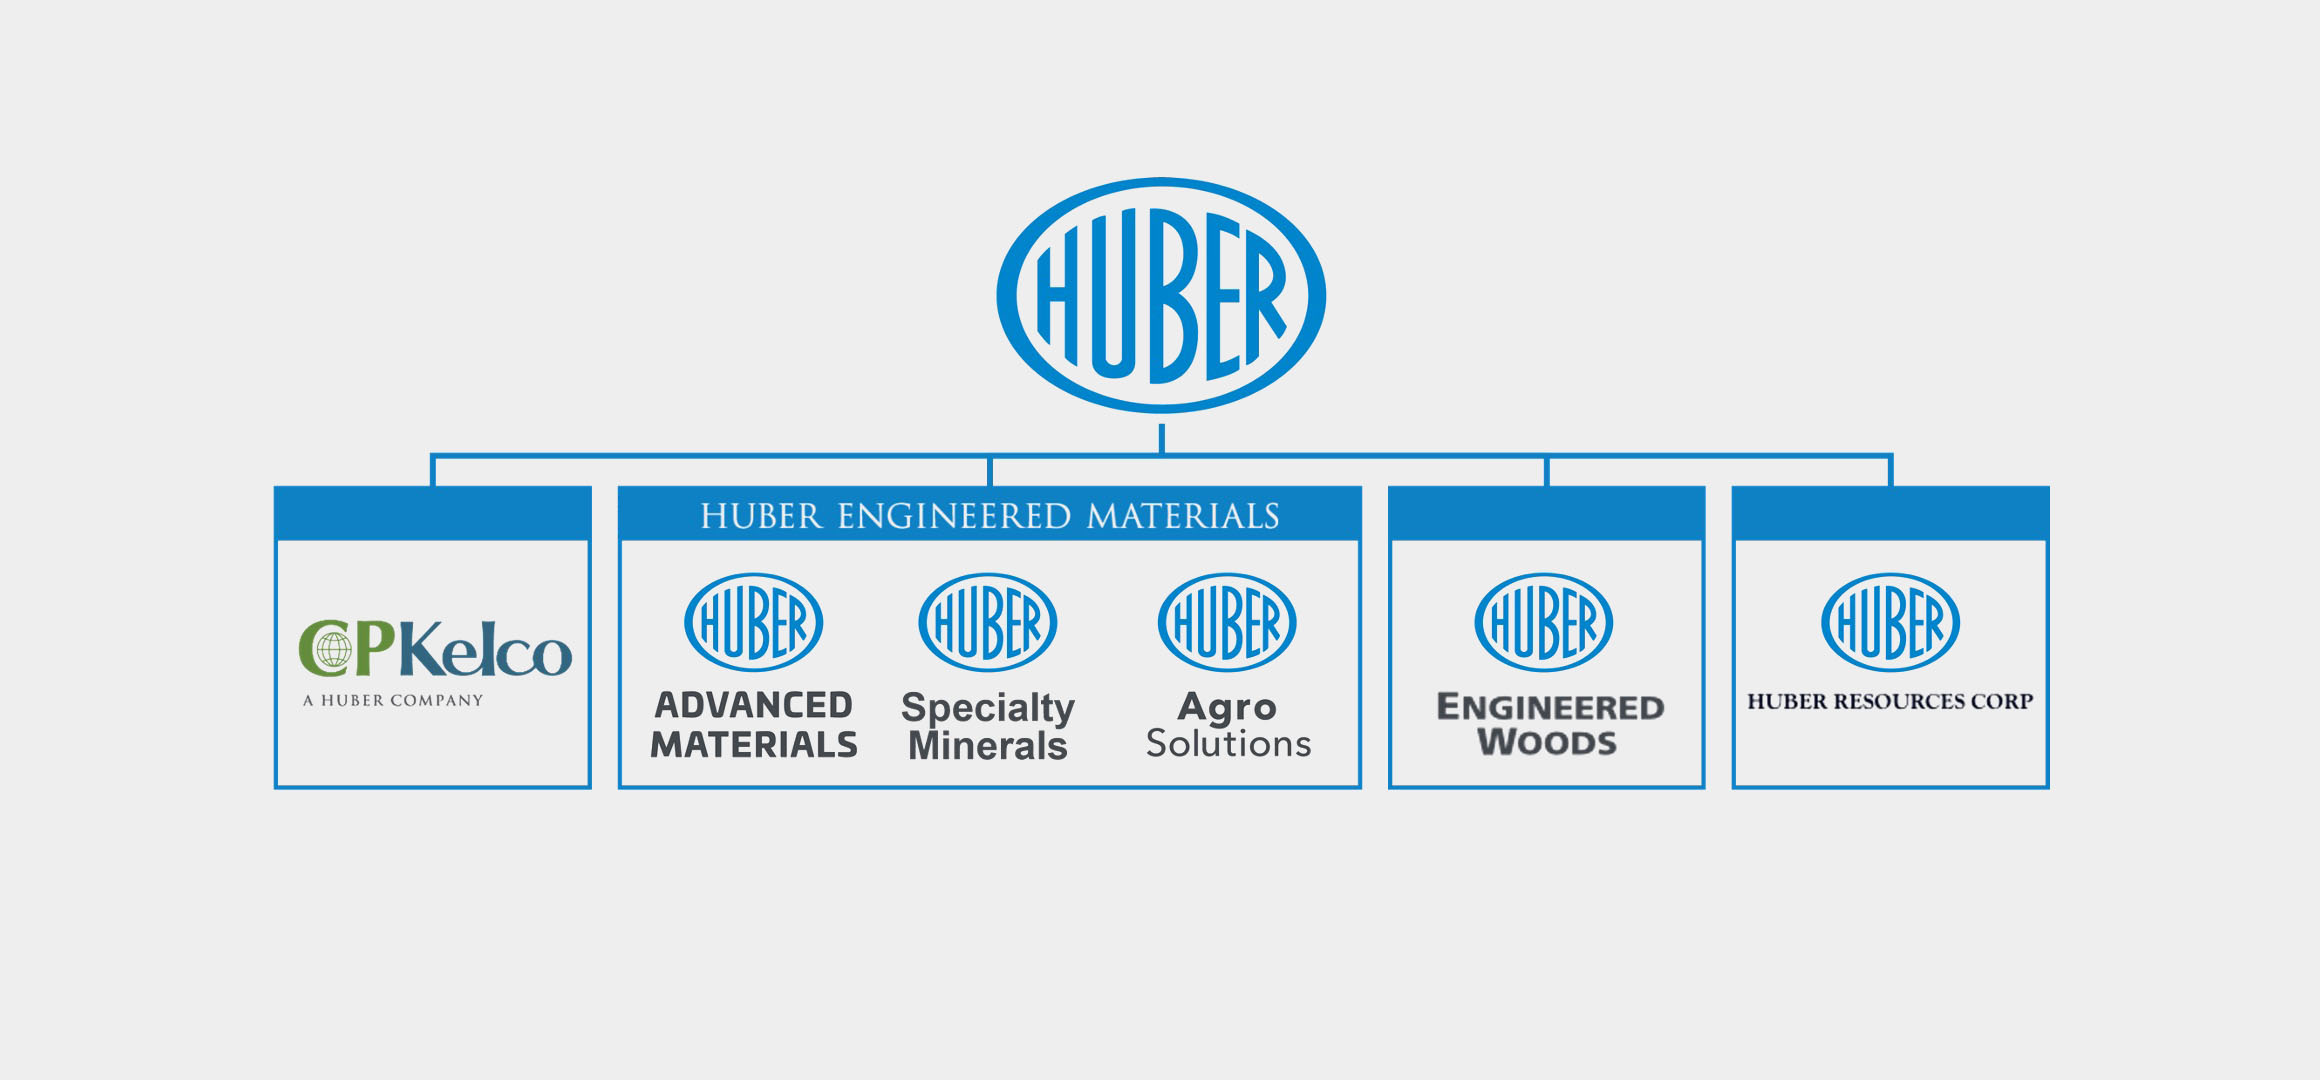 Huber Advanced Materials company structure